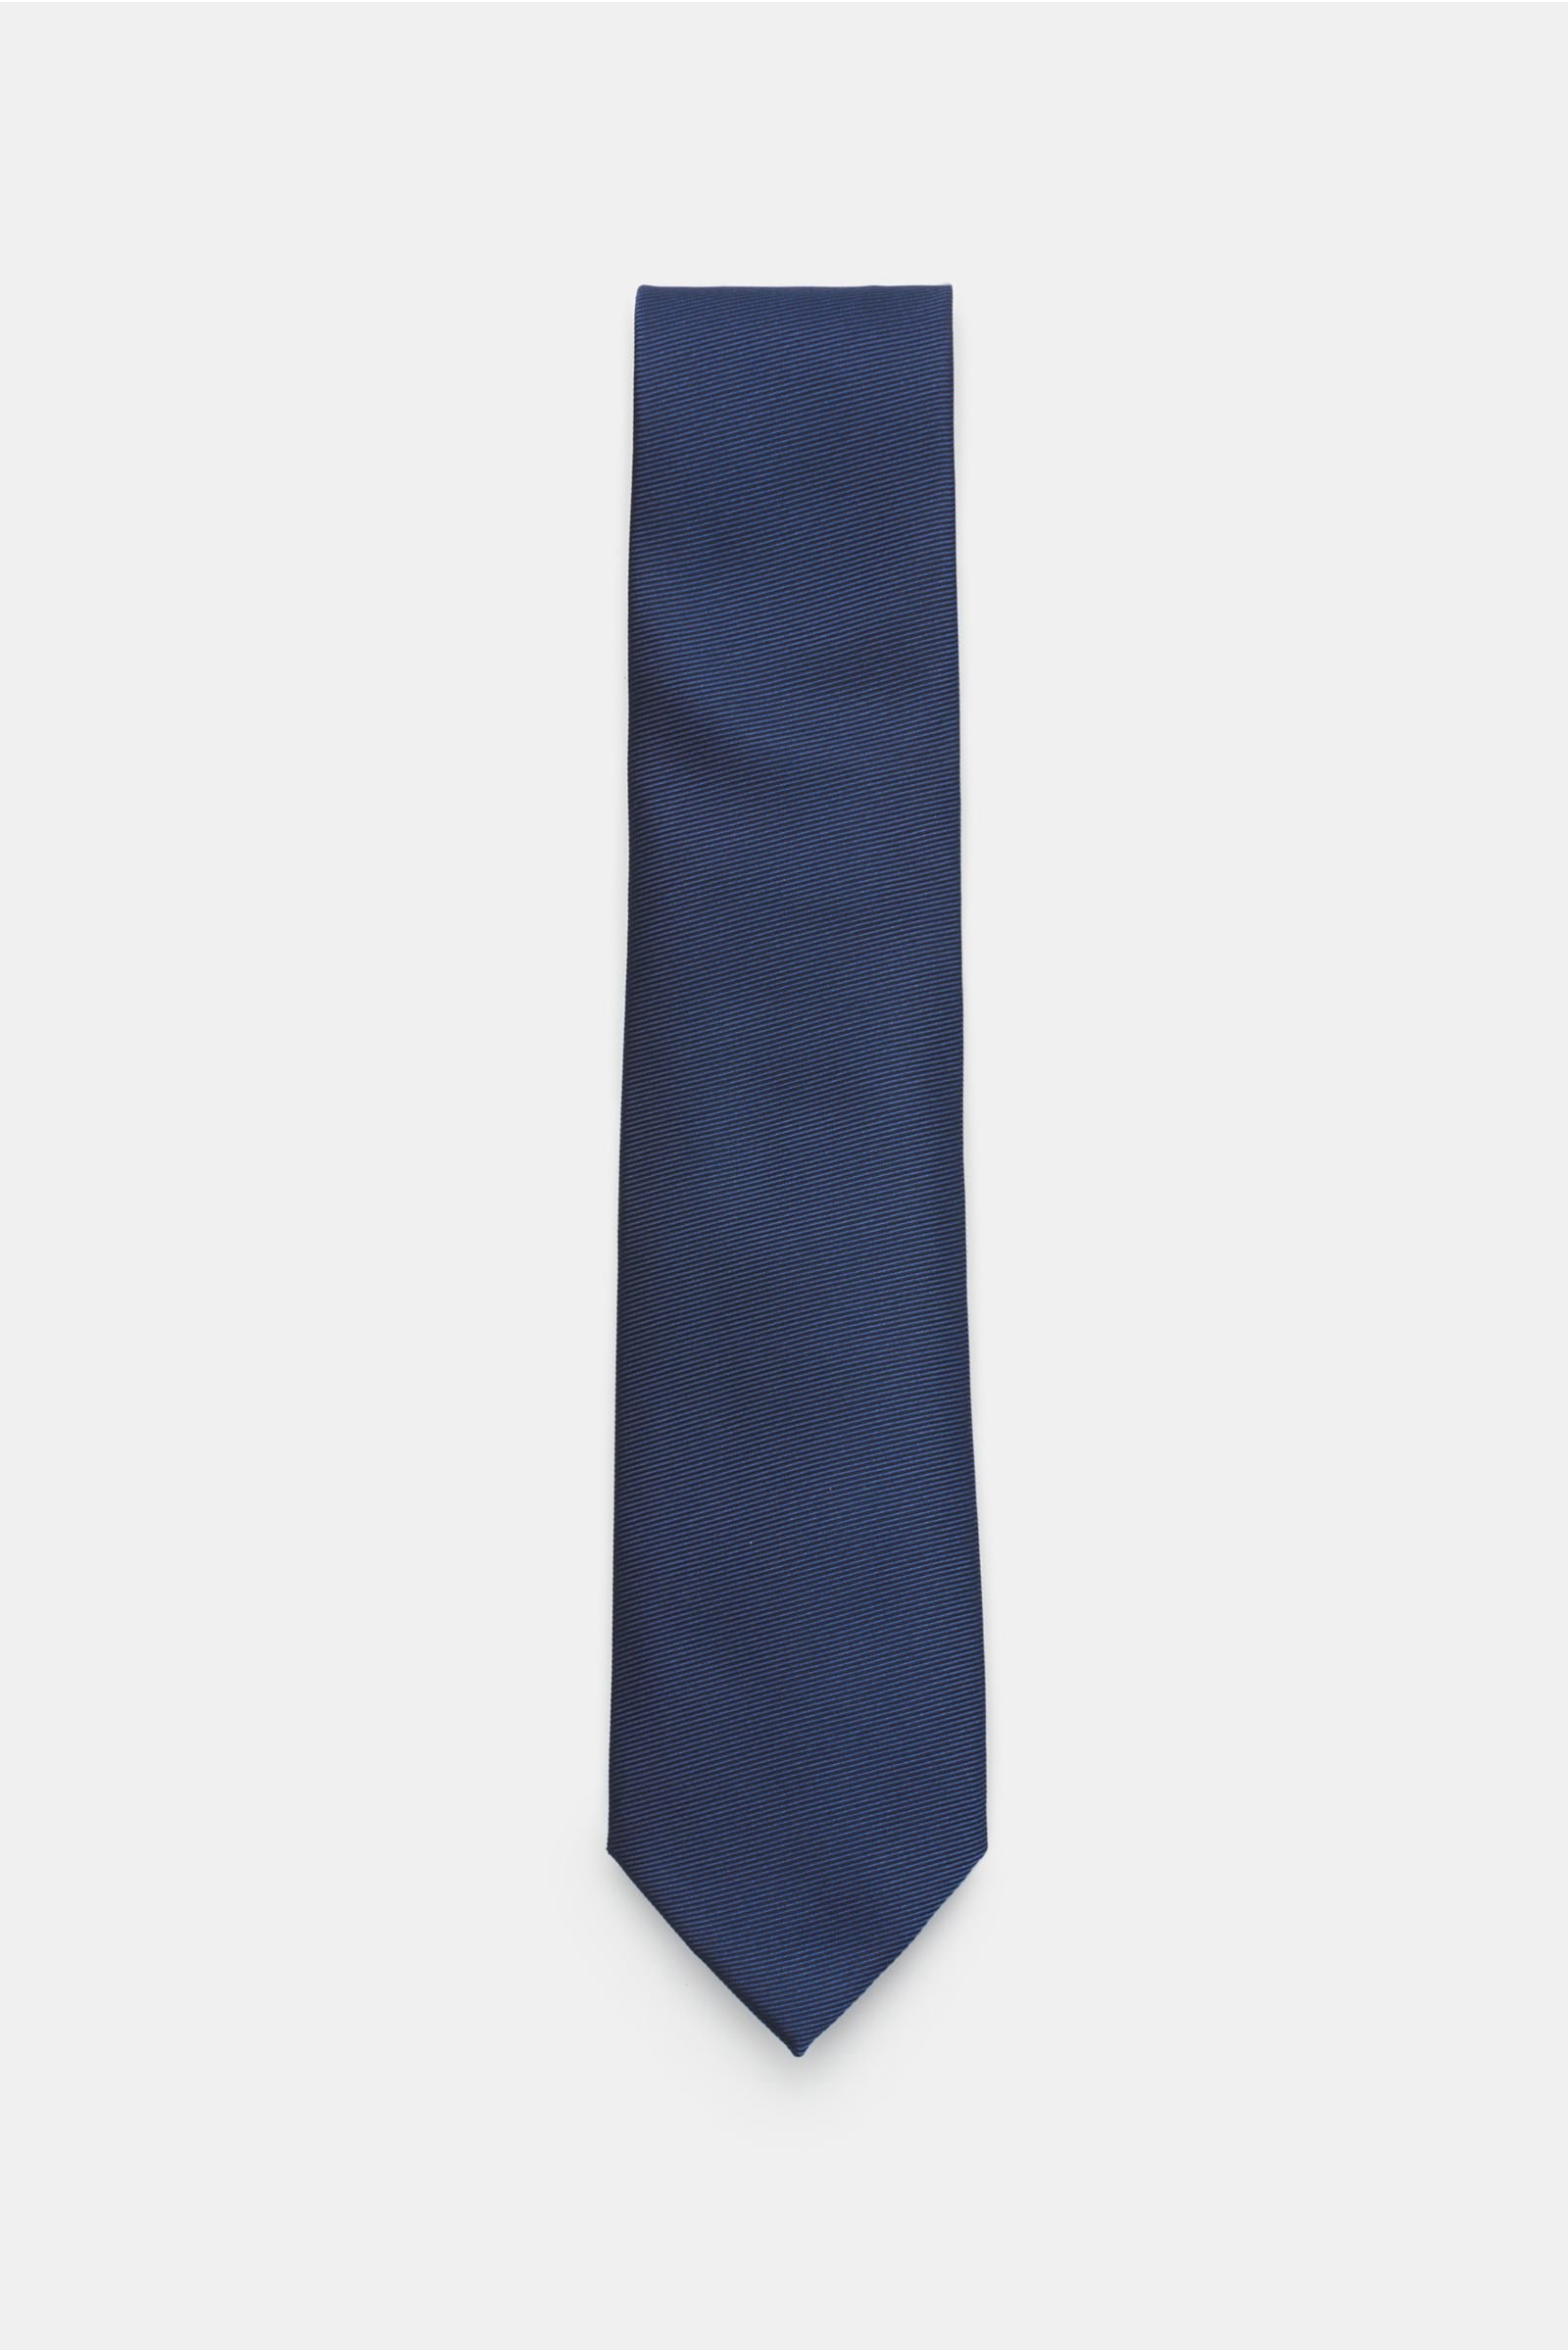 Silk tie grey-blue